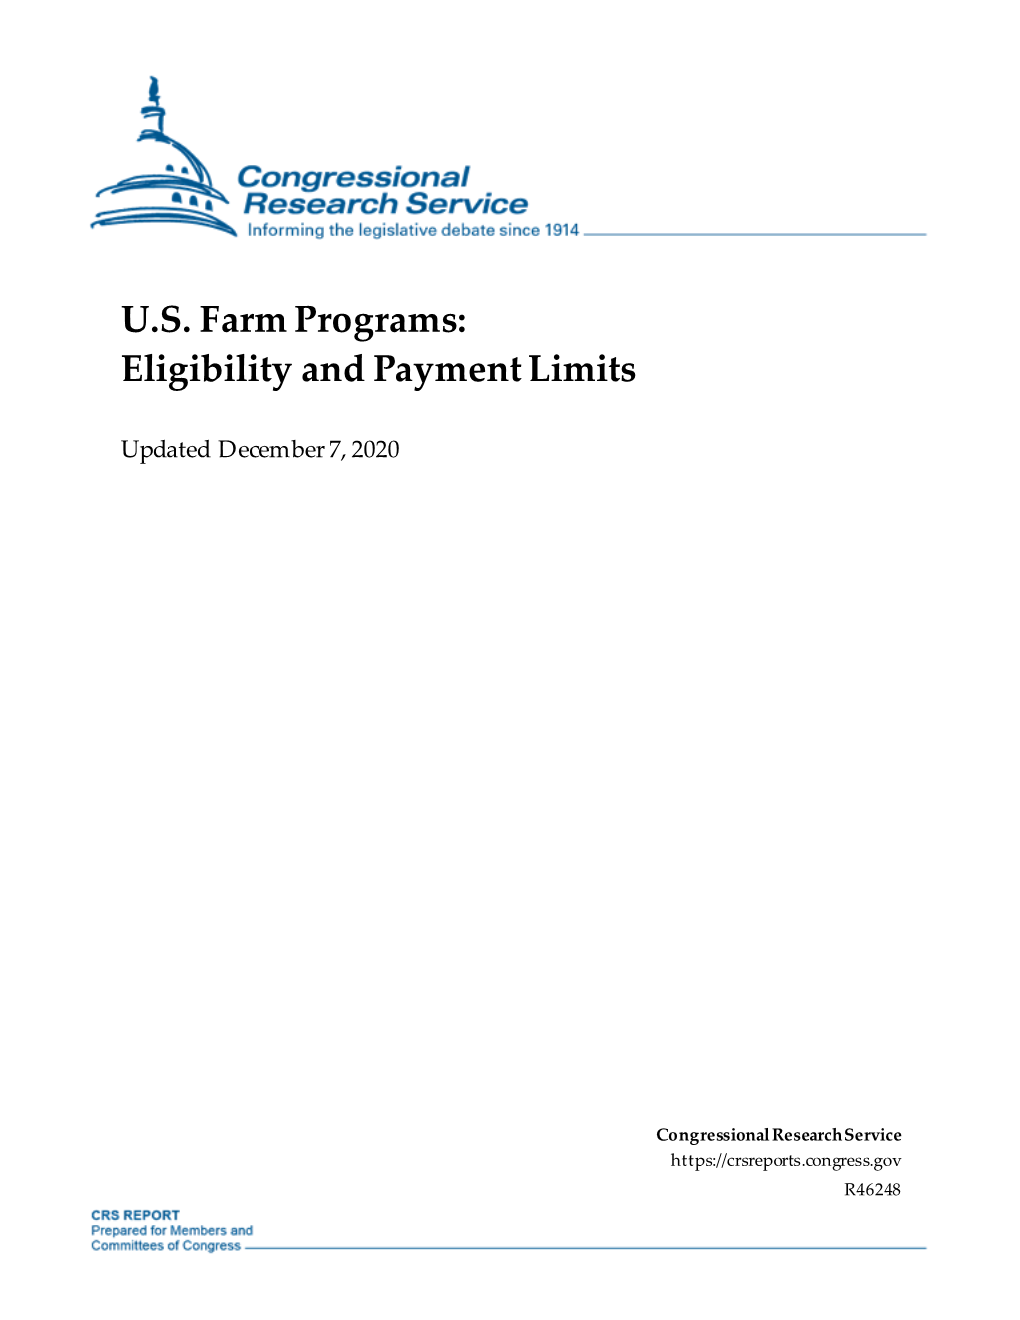 U.S. Farm Programs: Eligibility and Payment Limits